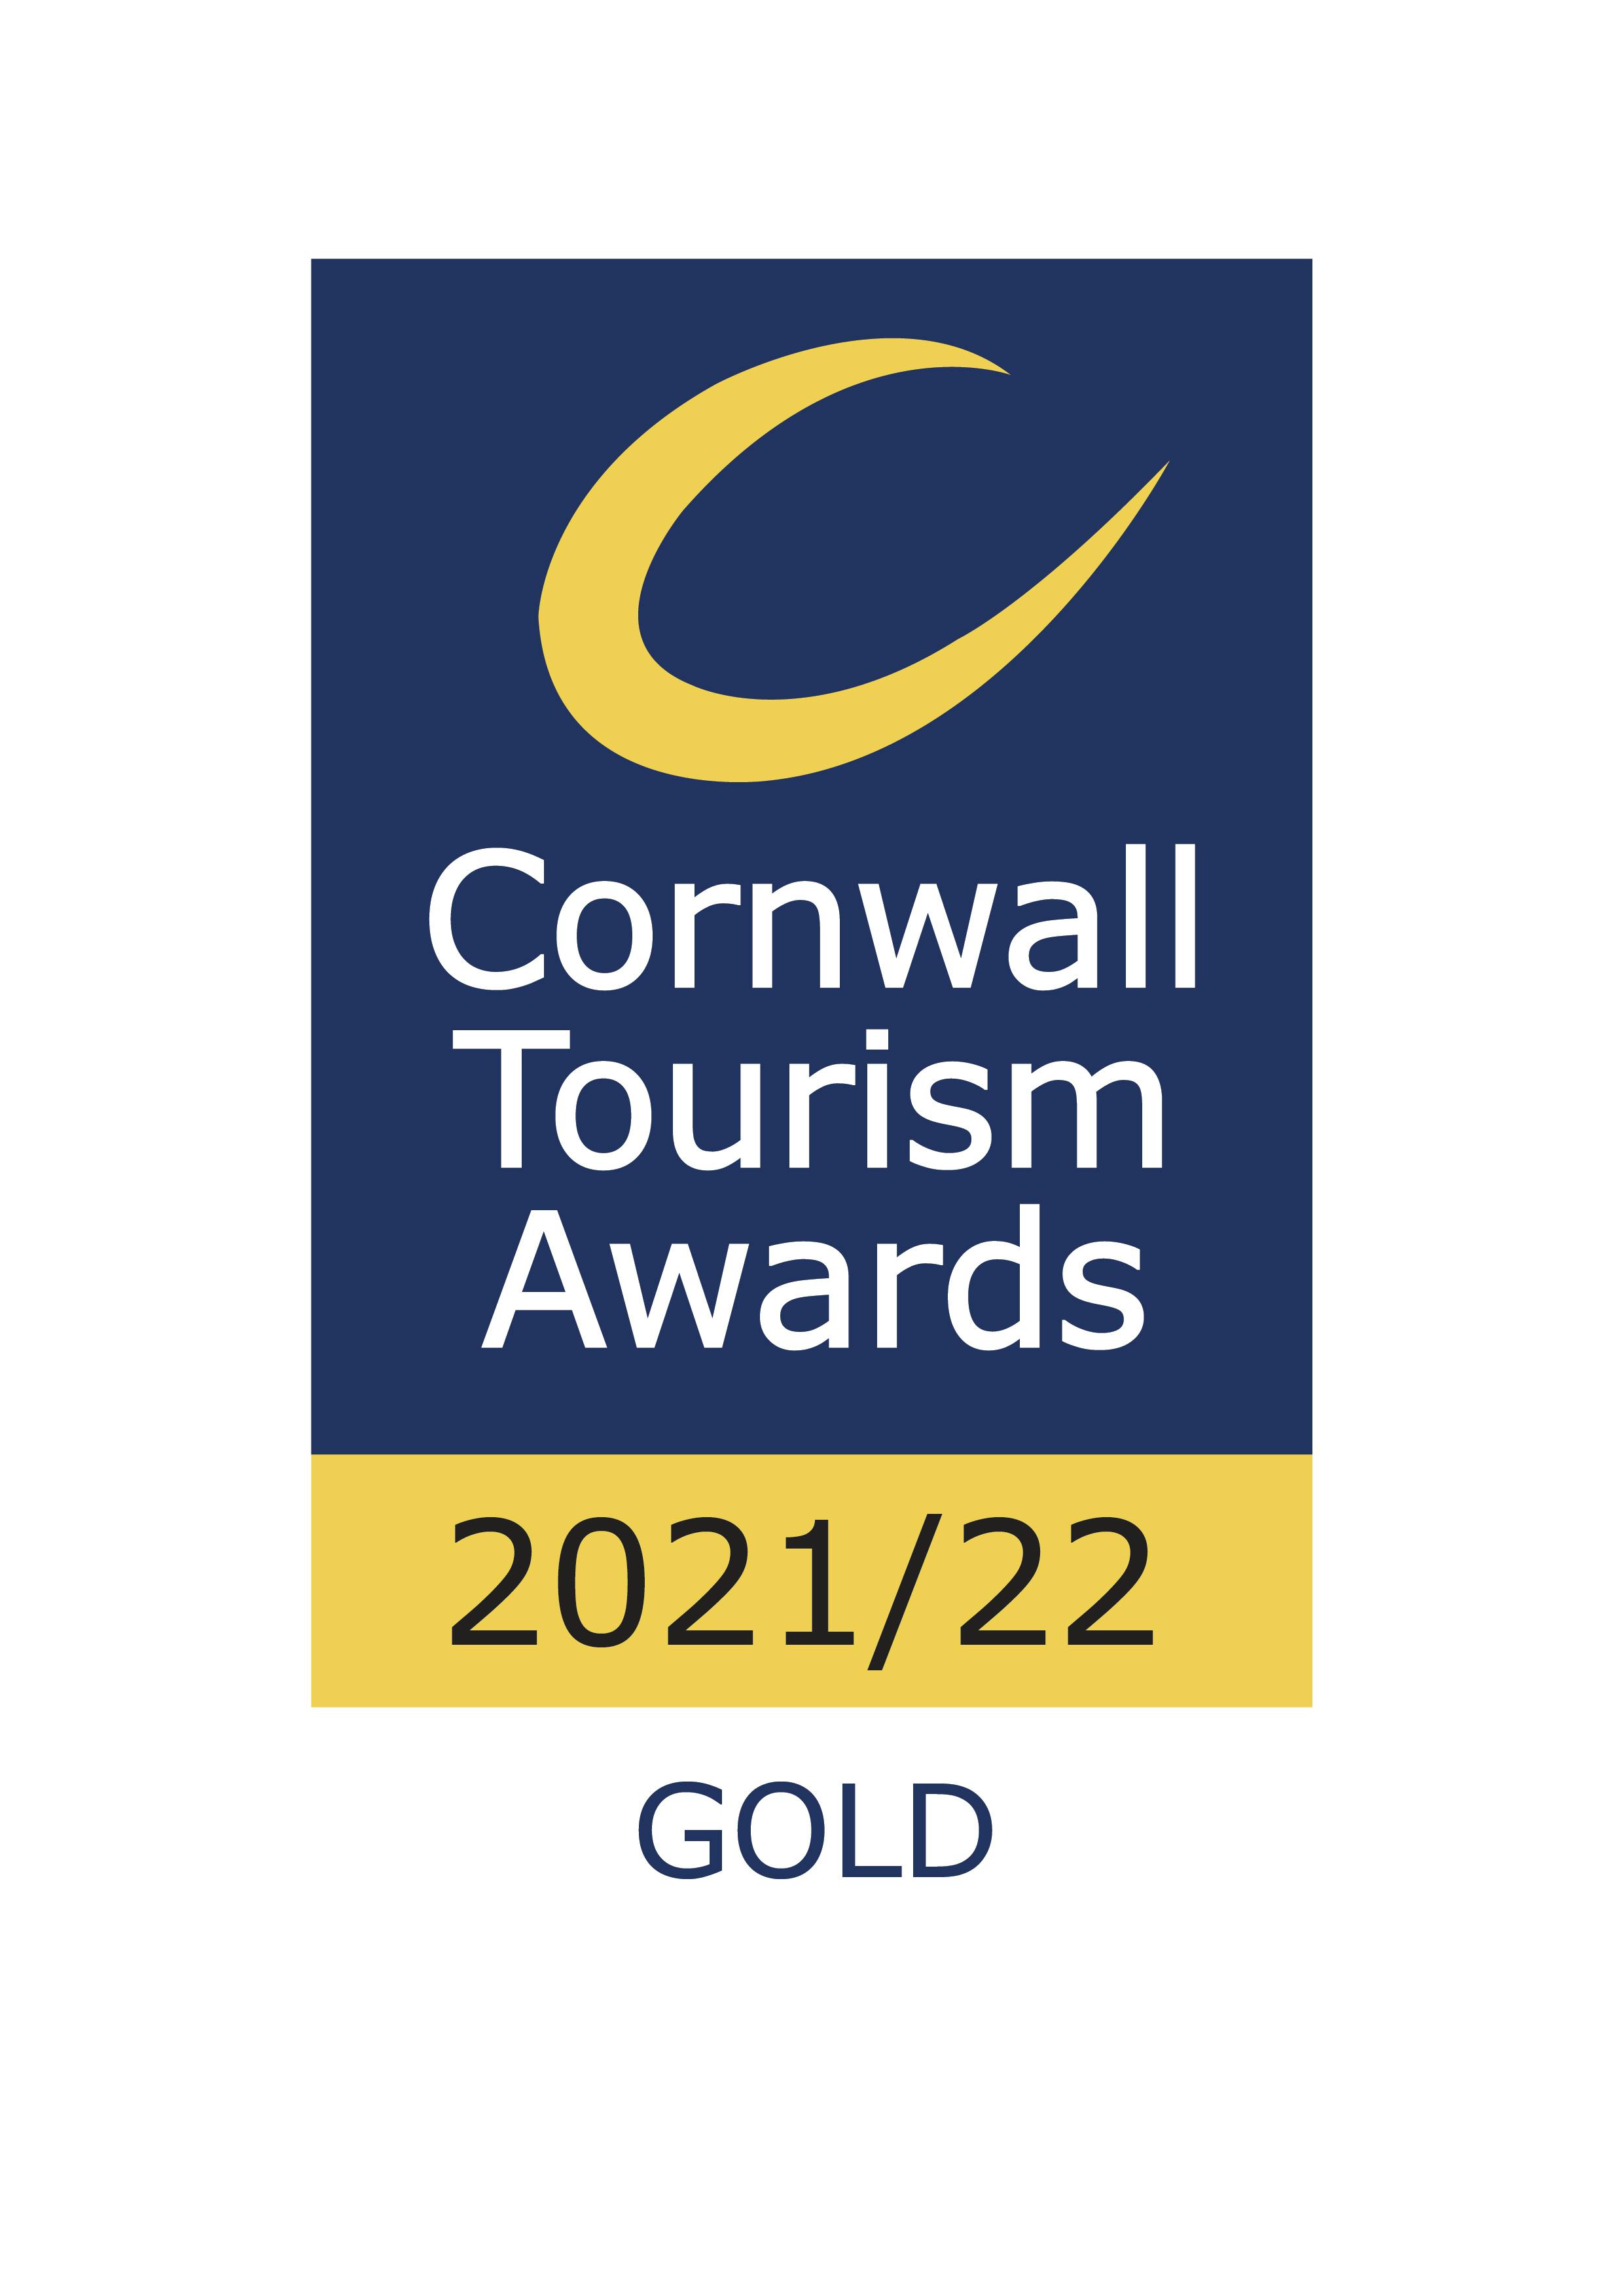 Cornwall Tourism Awards Gold 2021/2022